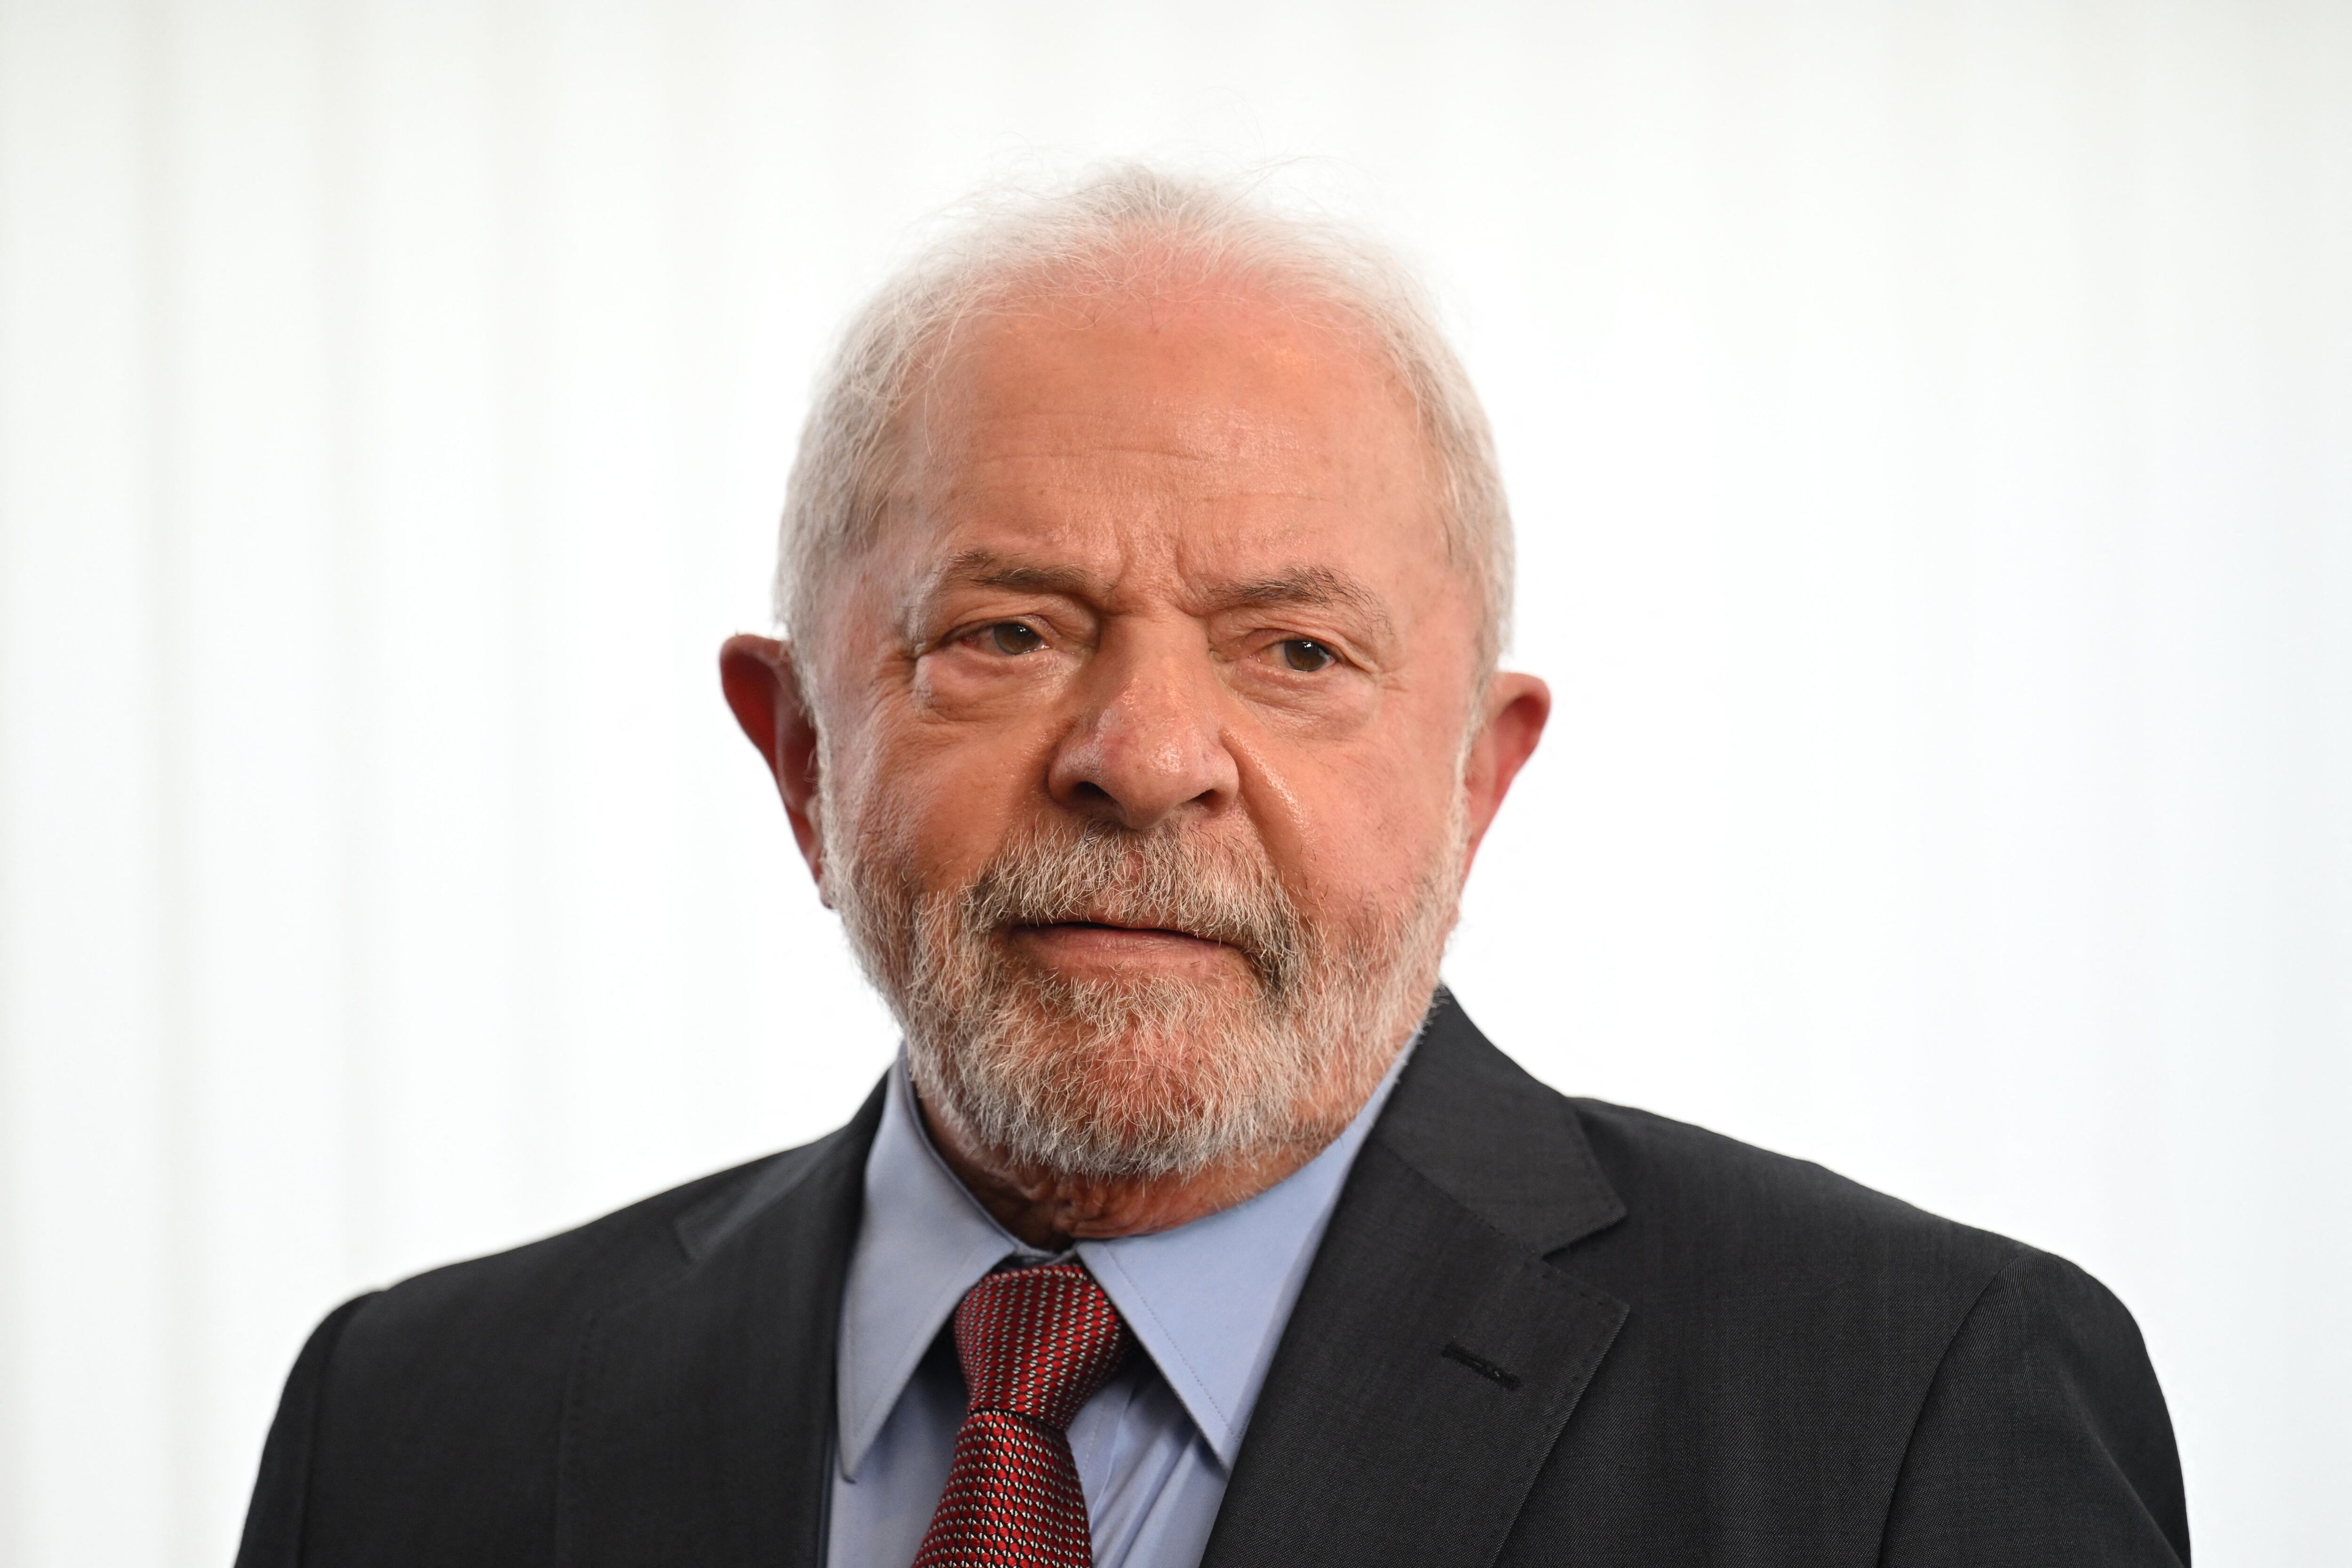 Lula echa a 40 militares de la residencia presidencial tras ataques en Brasil